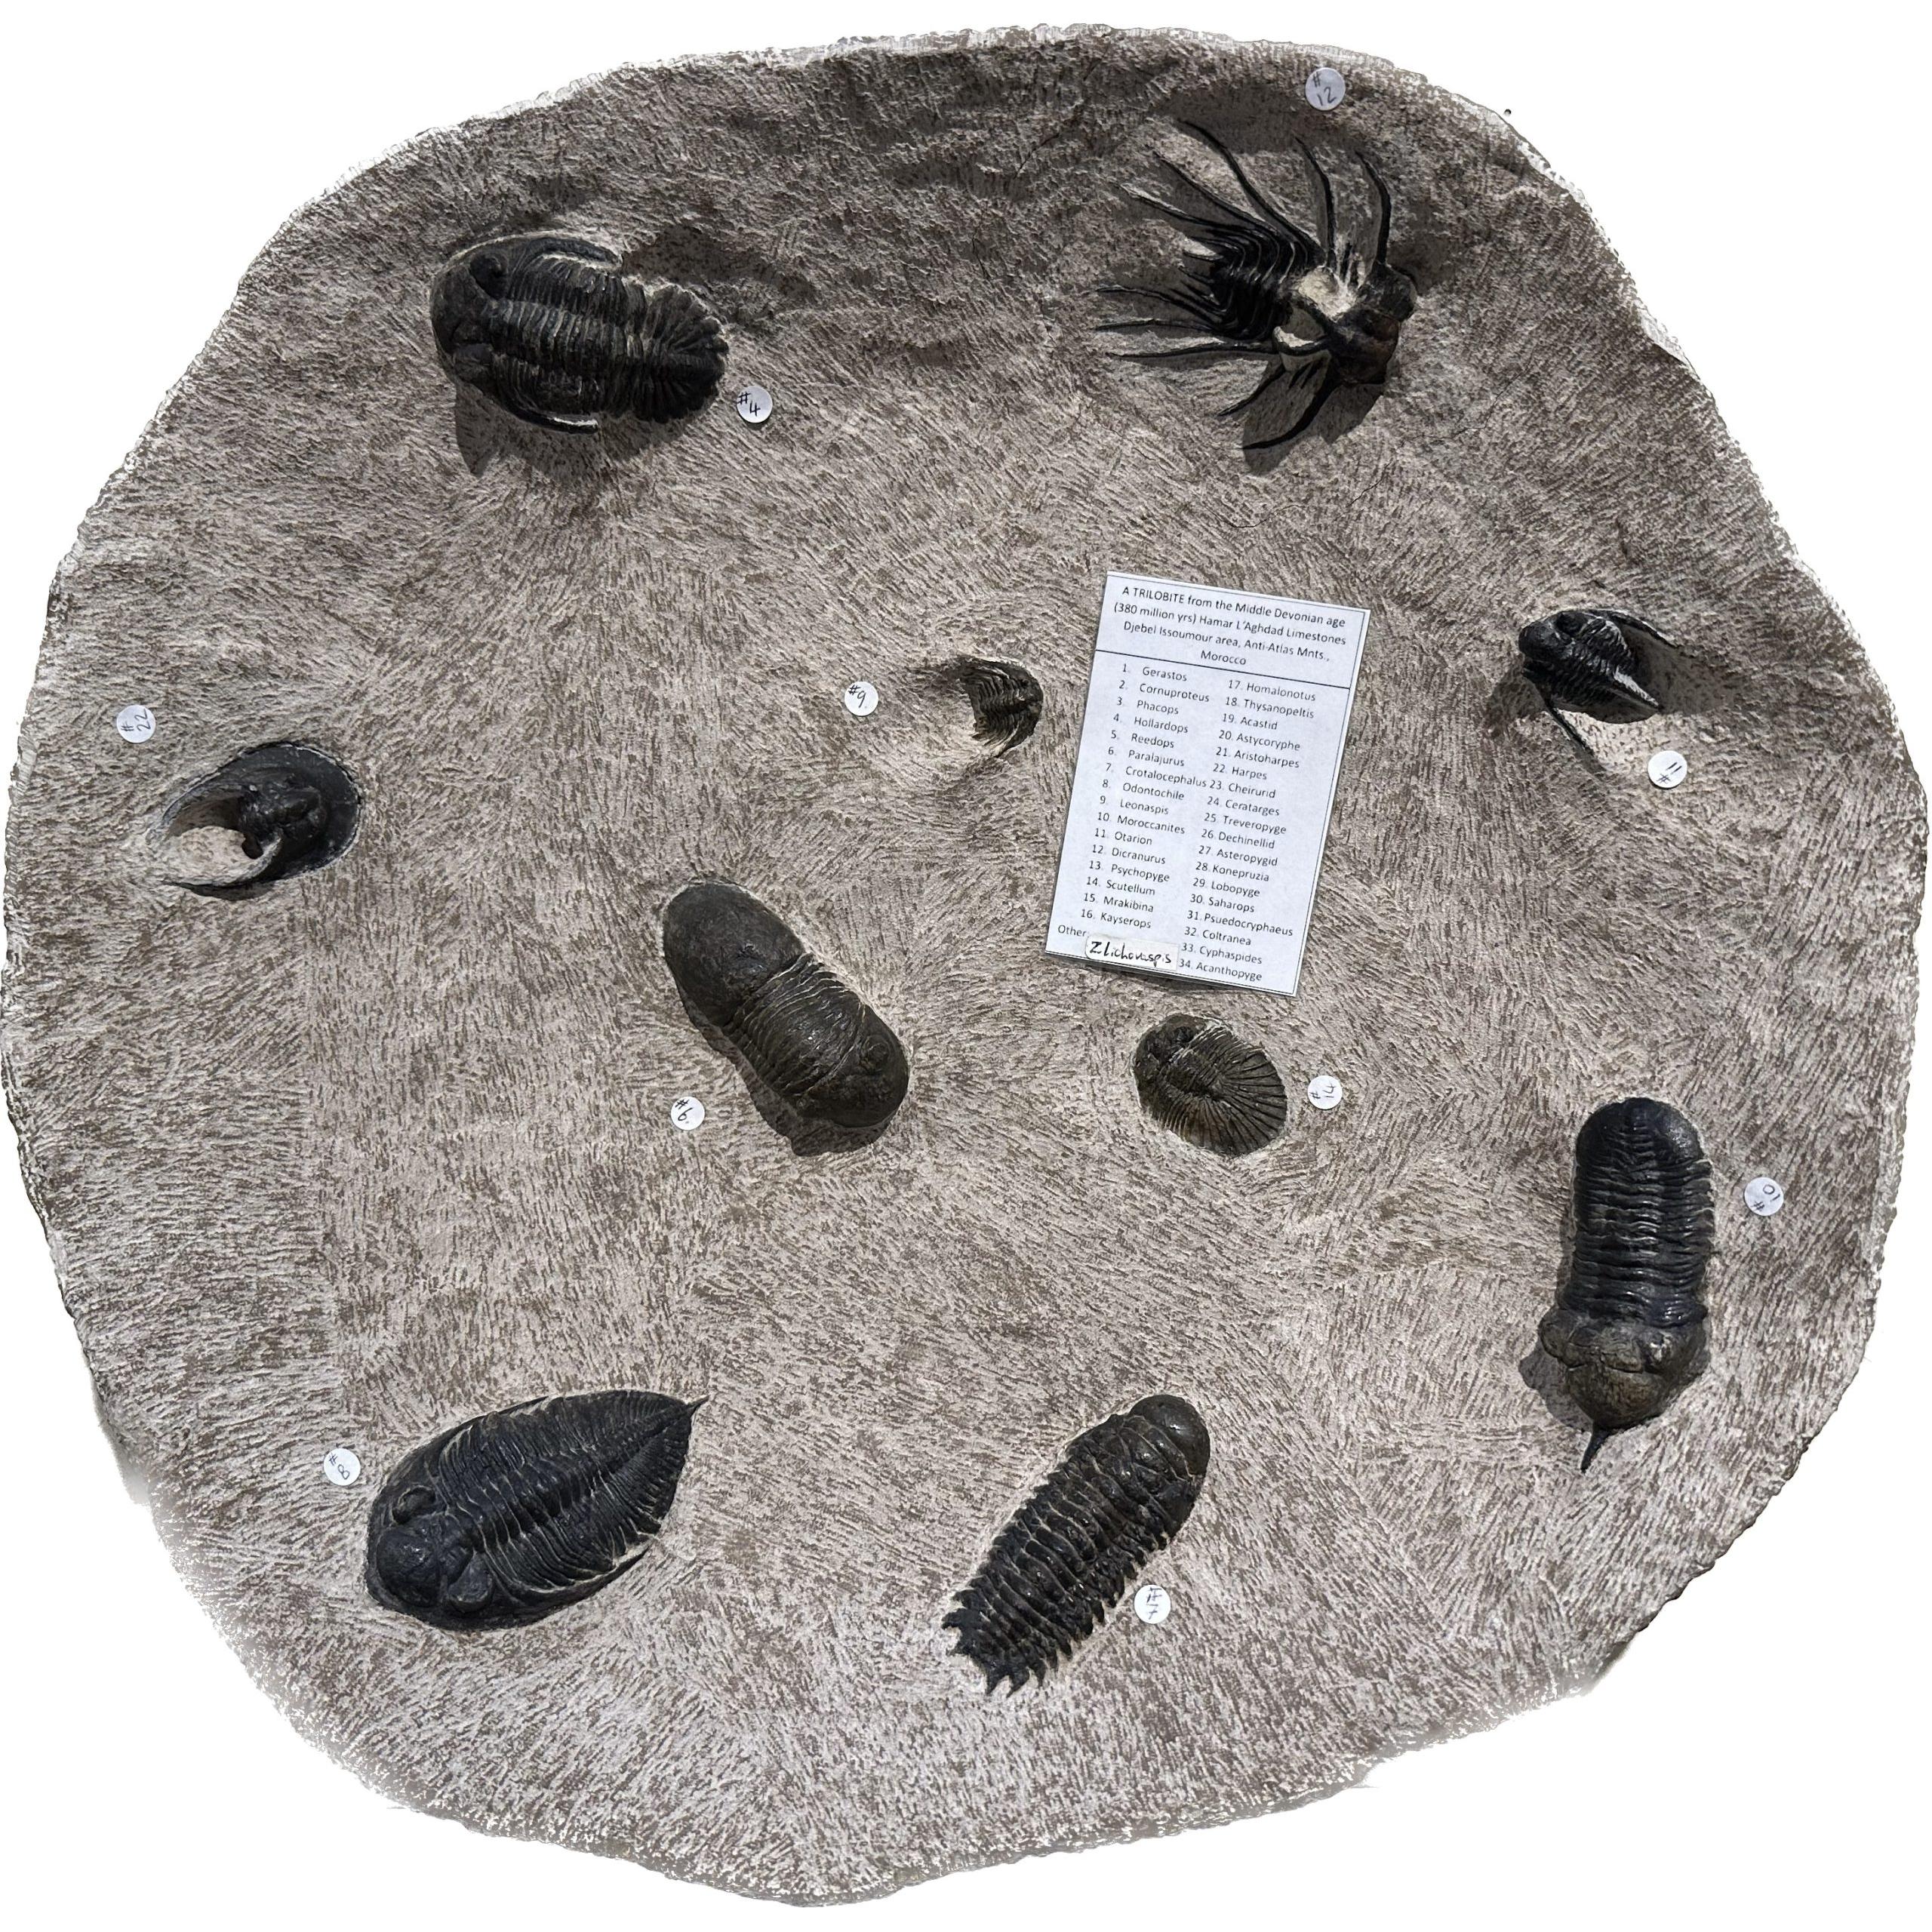 Fossil Bowl, Trilobite composite, 10 trilobites Prehistoric Online